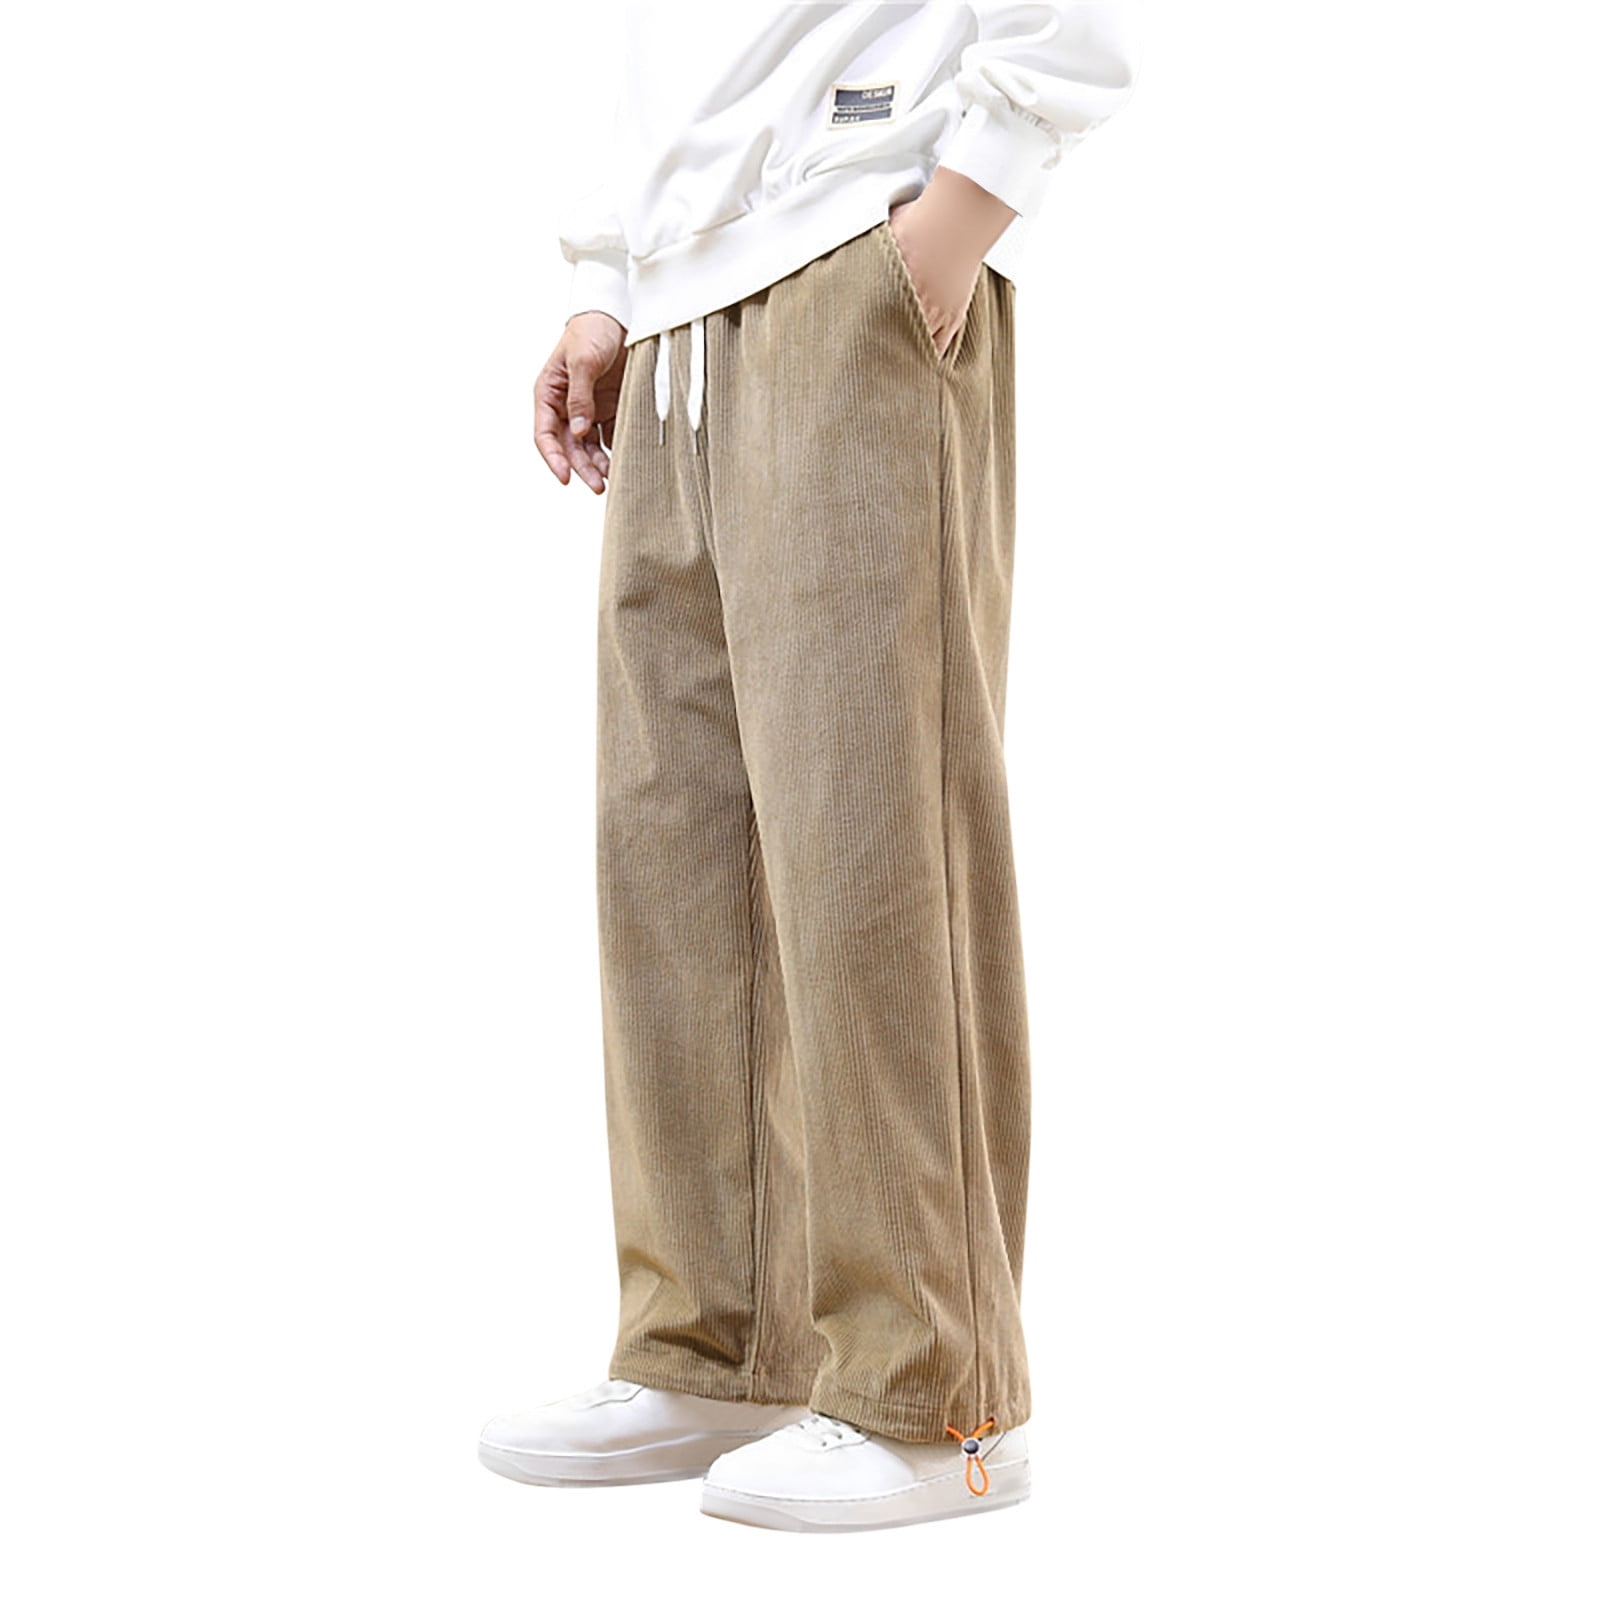 AdBFJAF Pants for Men Stretch Jeans Men's Corduroy Pants Elastic Waist ...